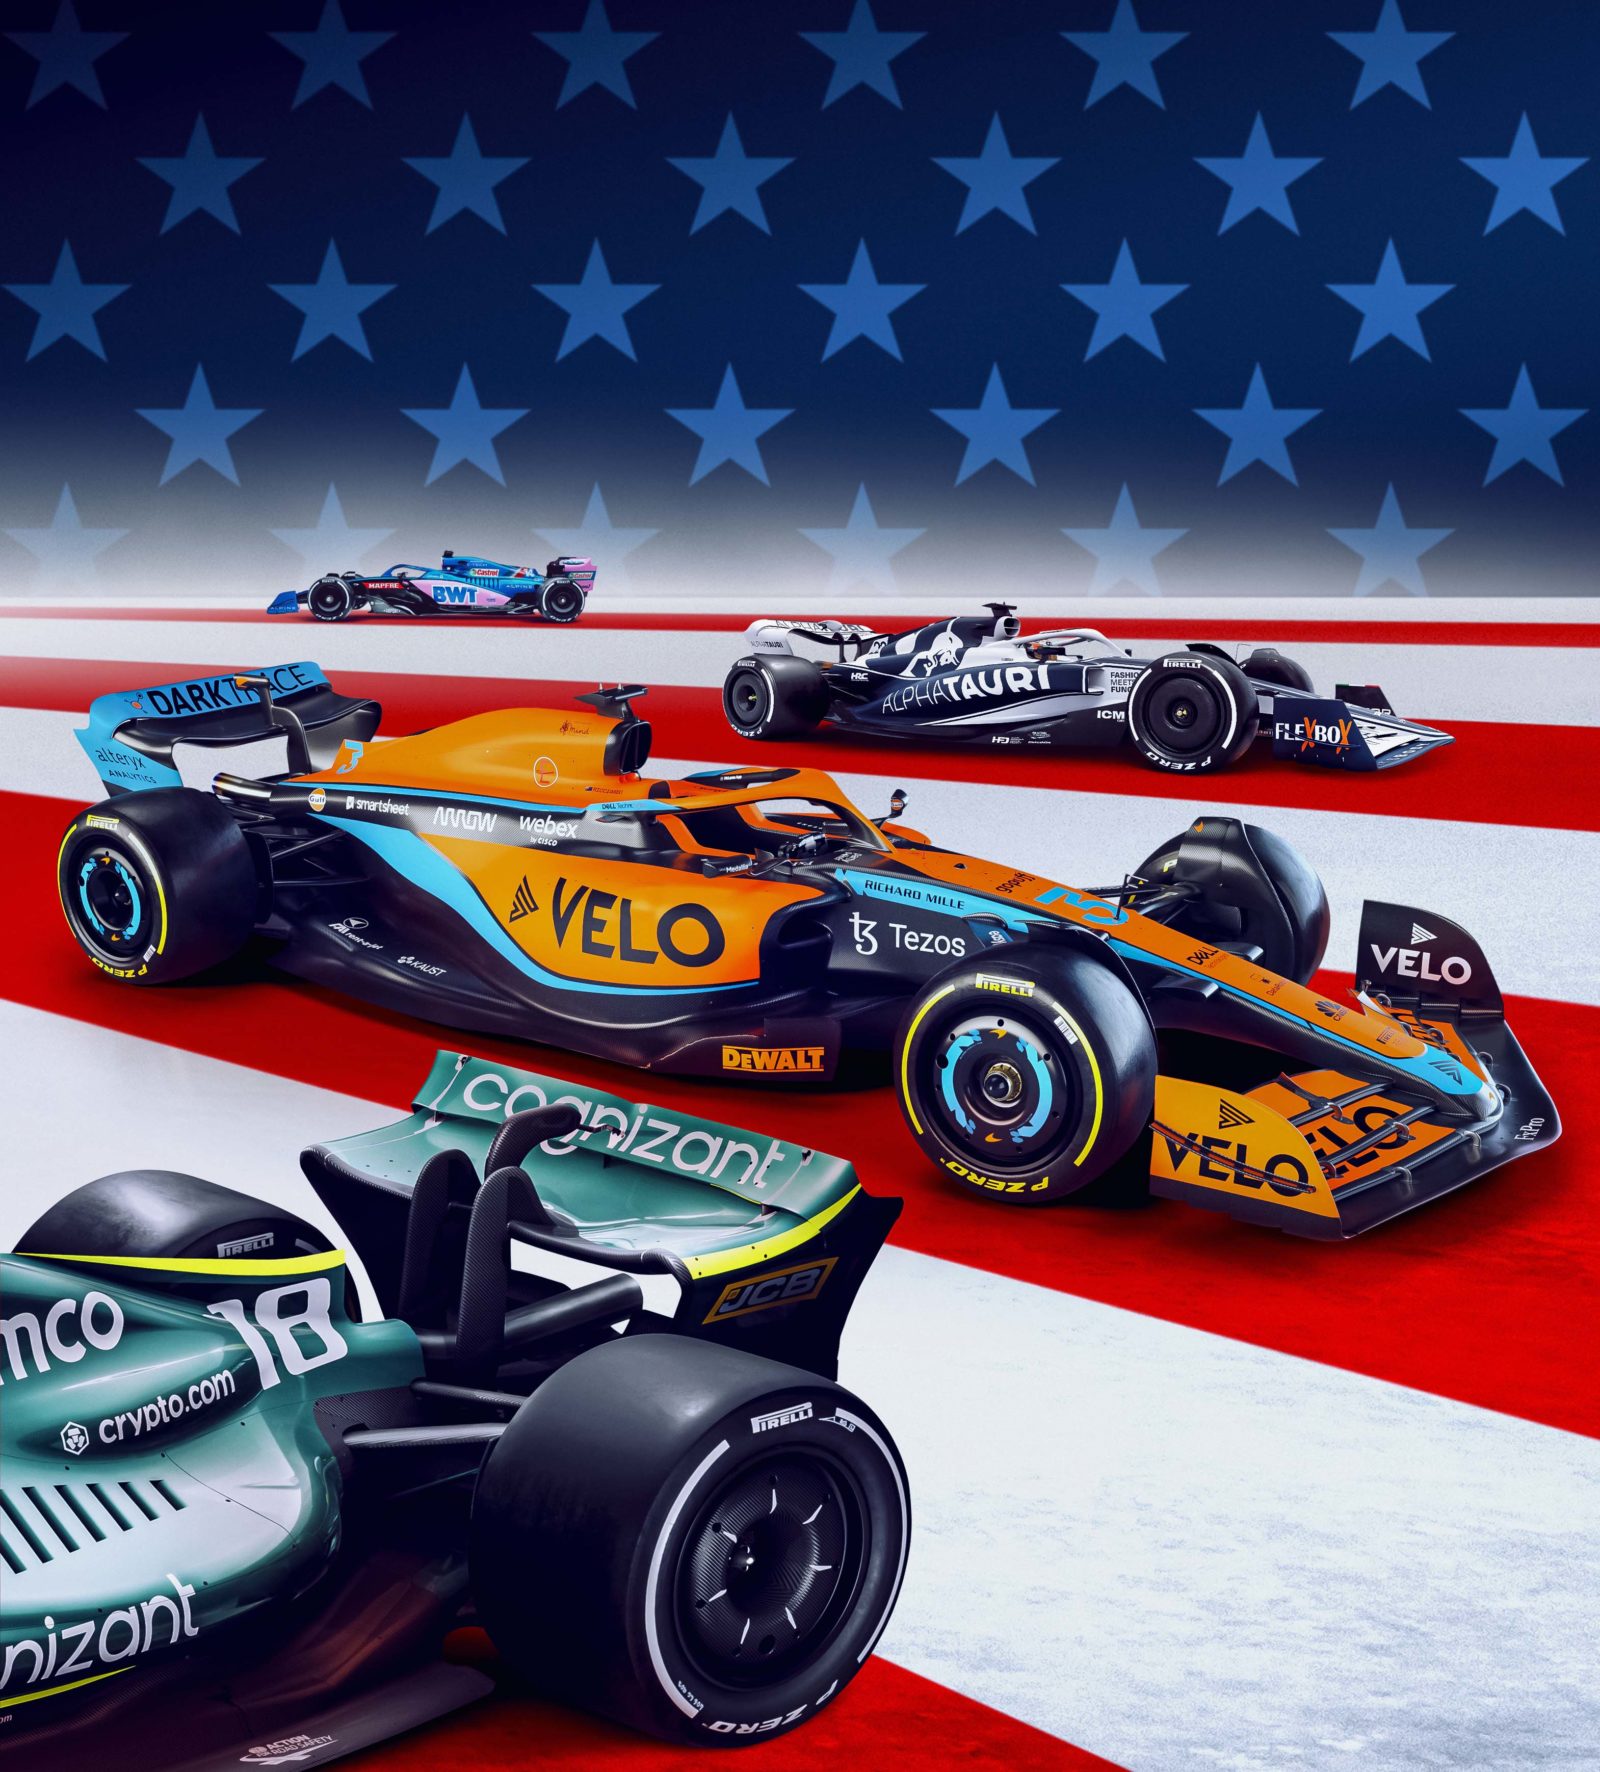 F1 cars on American flag